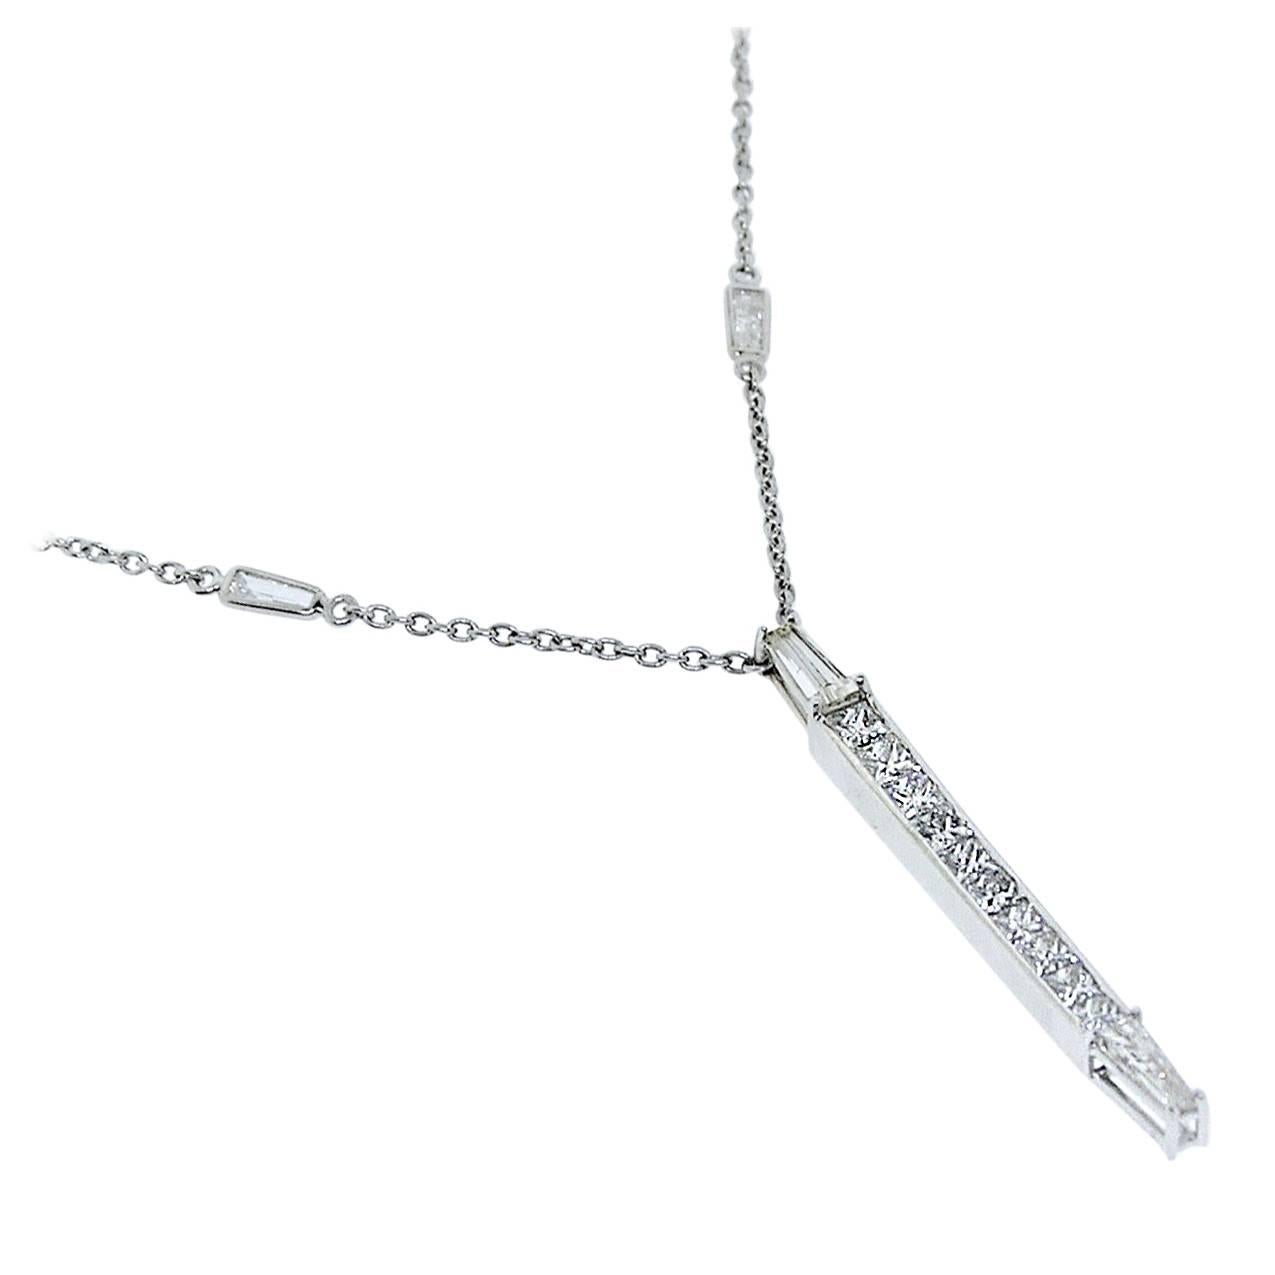 Princess and Baguette Cut Diamond Necklace For Sale